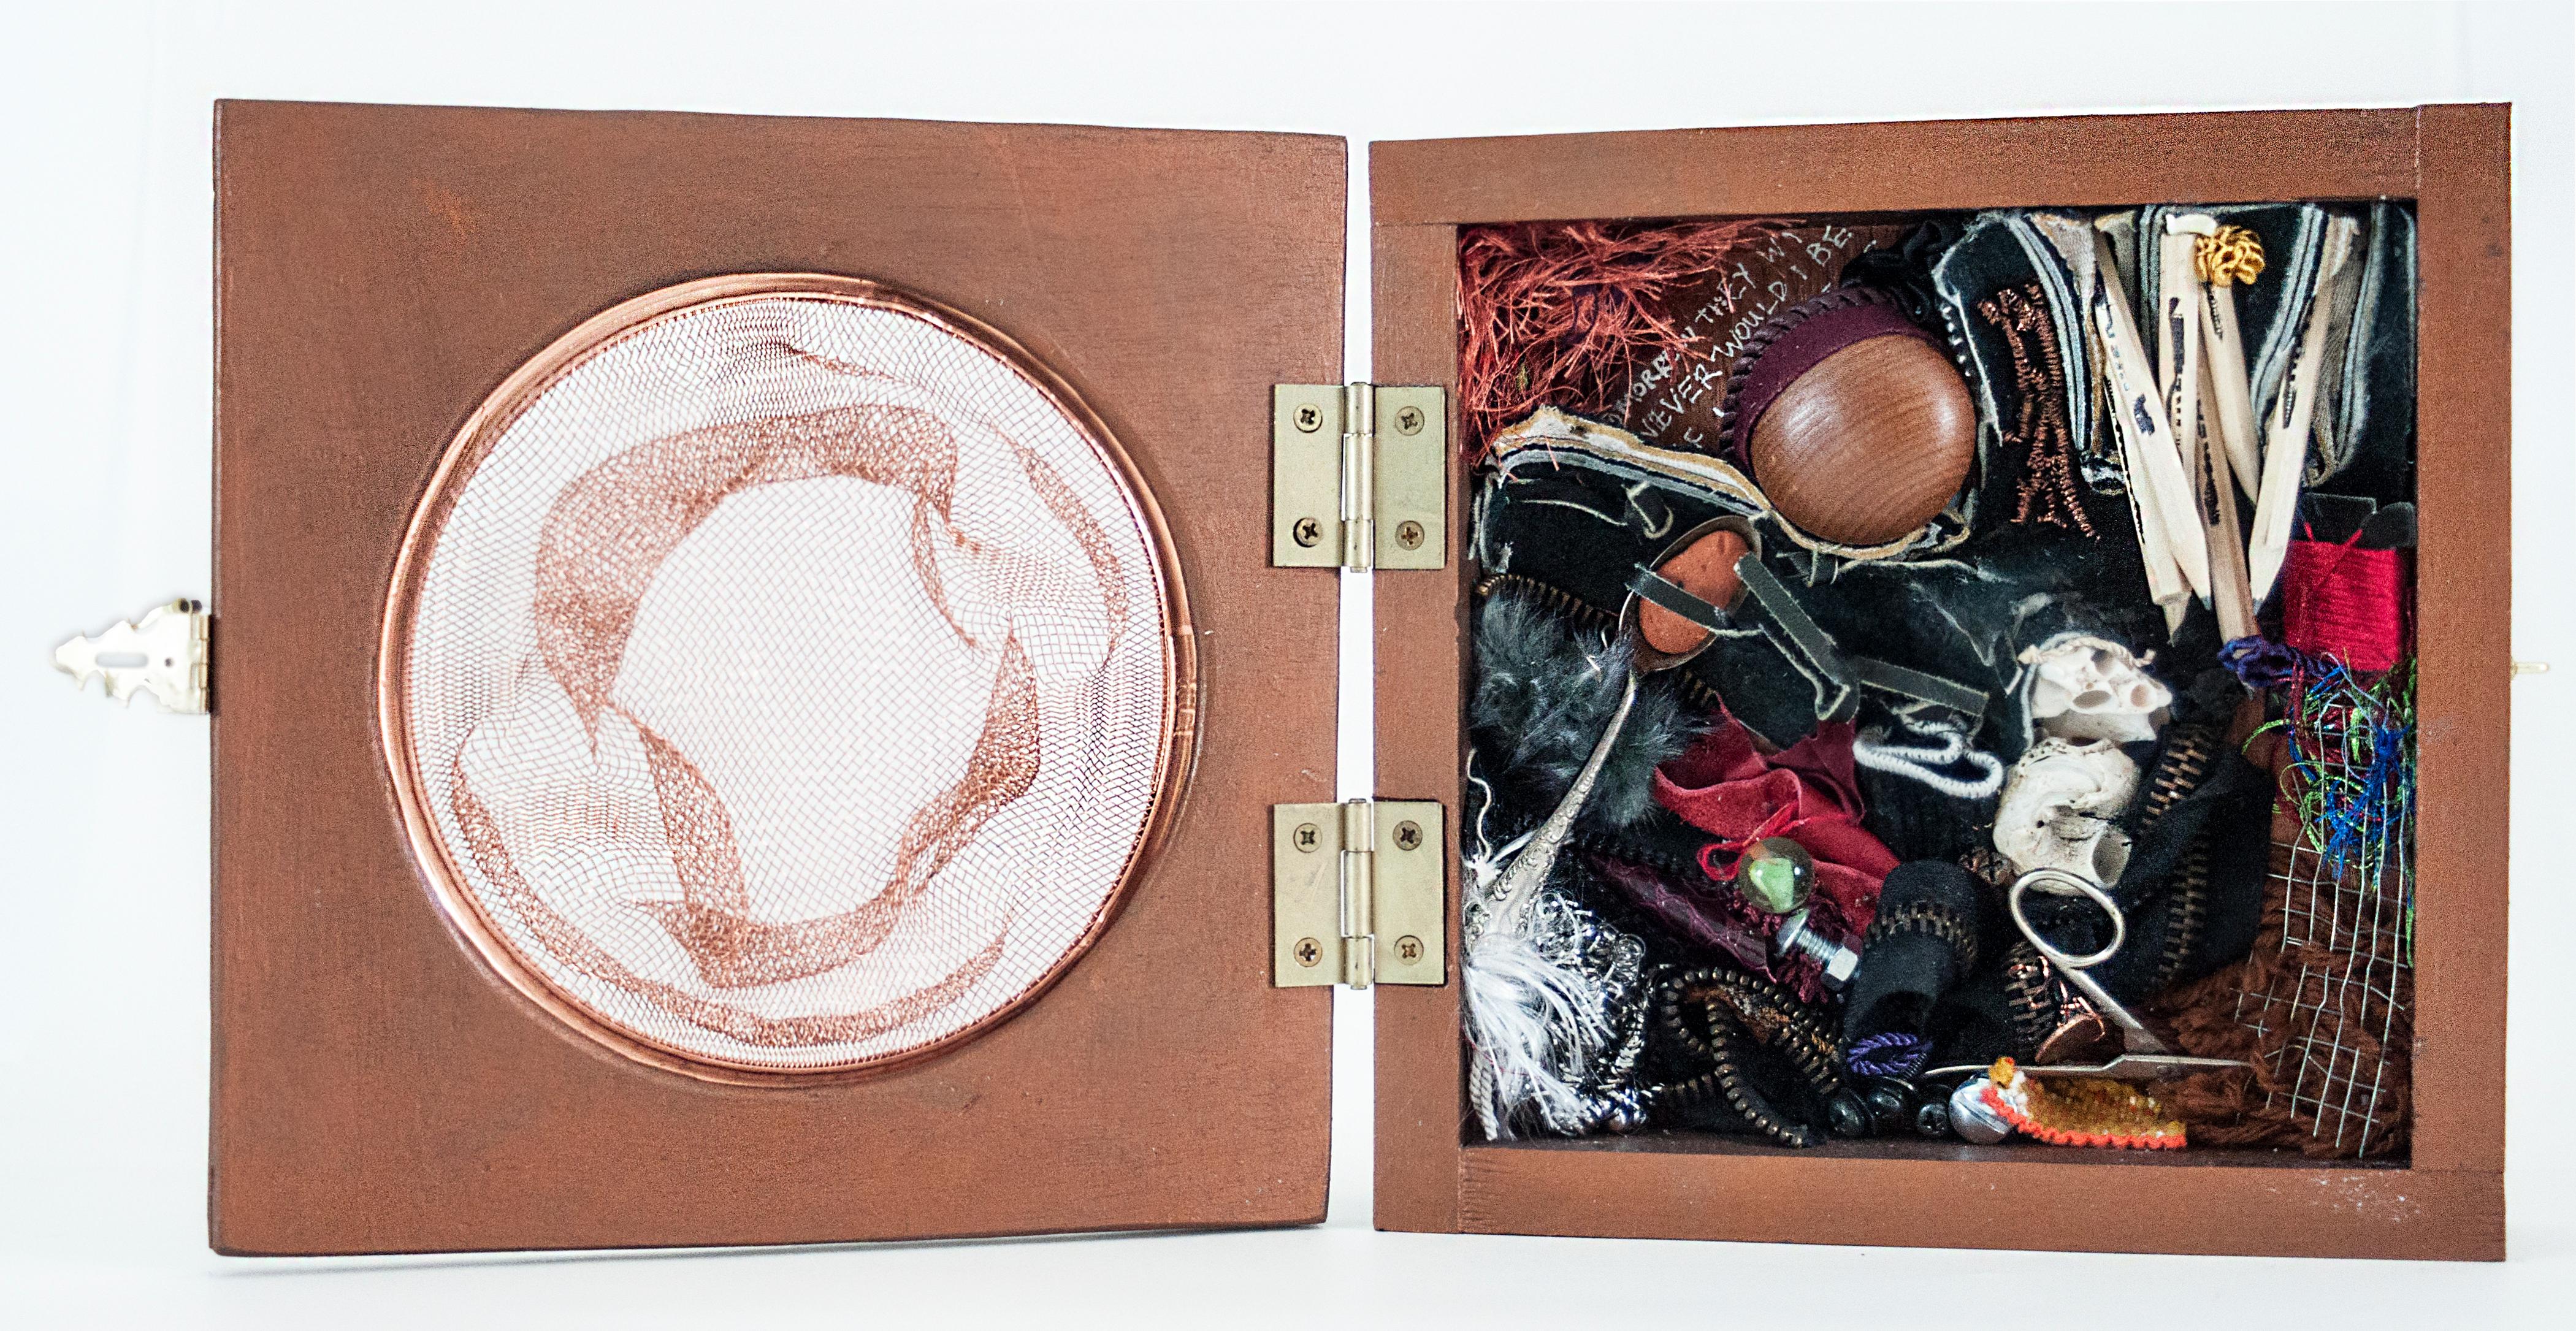 Linda Stein Abstract Sculpture - Case 893  - Cabinet of Curiosities, Wunderkammer, Contemporary Art Sculpture